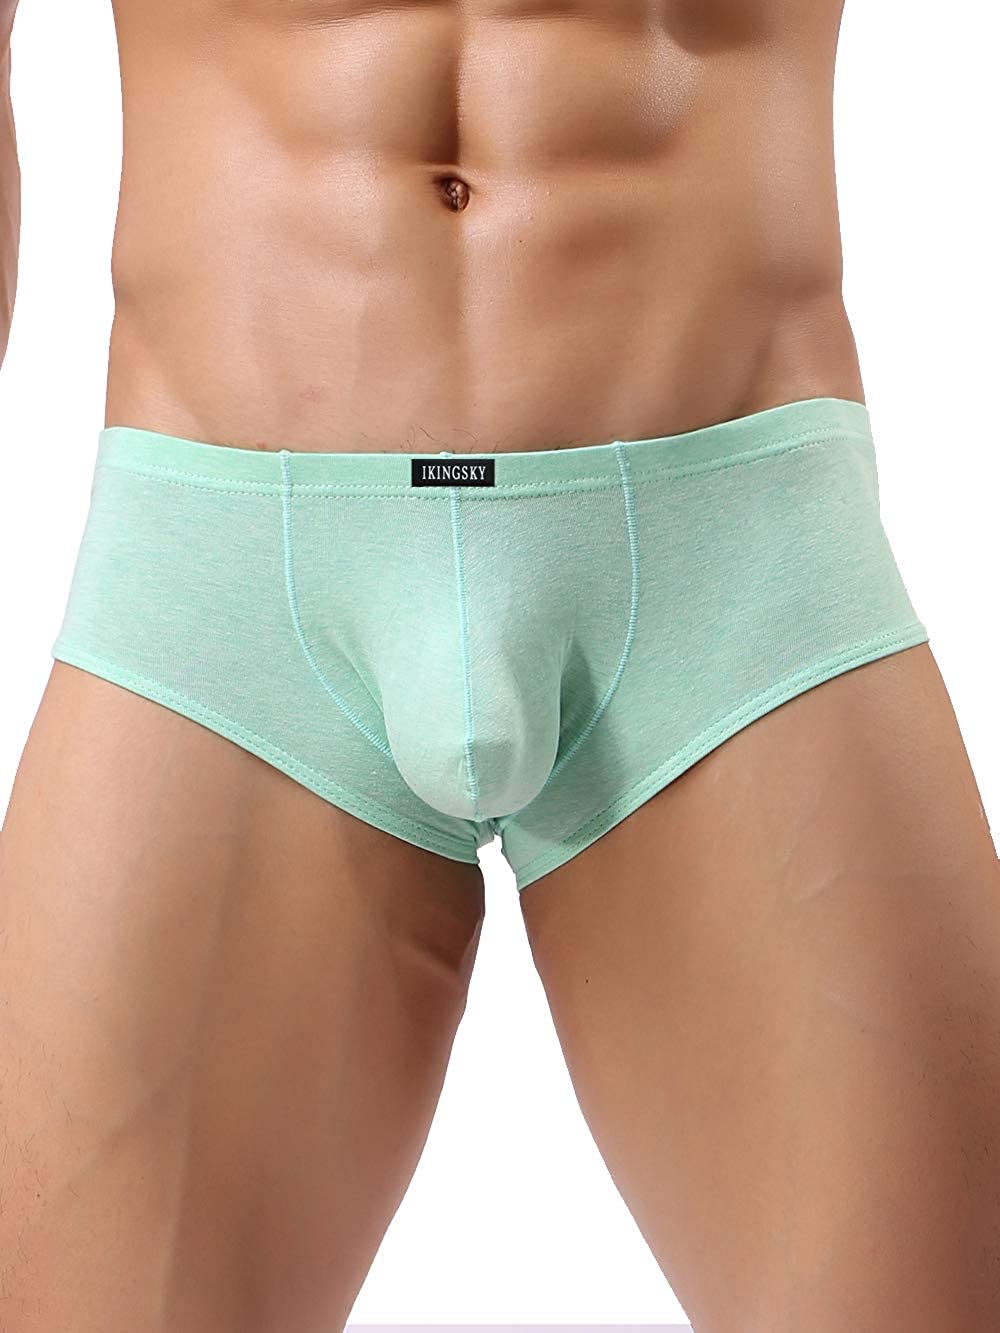 Ikingsky Men S Cotton Boxer Briefs Underwear Sexy Low Rise Men Pouch Boxer Short Ebay